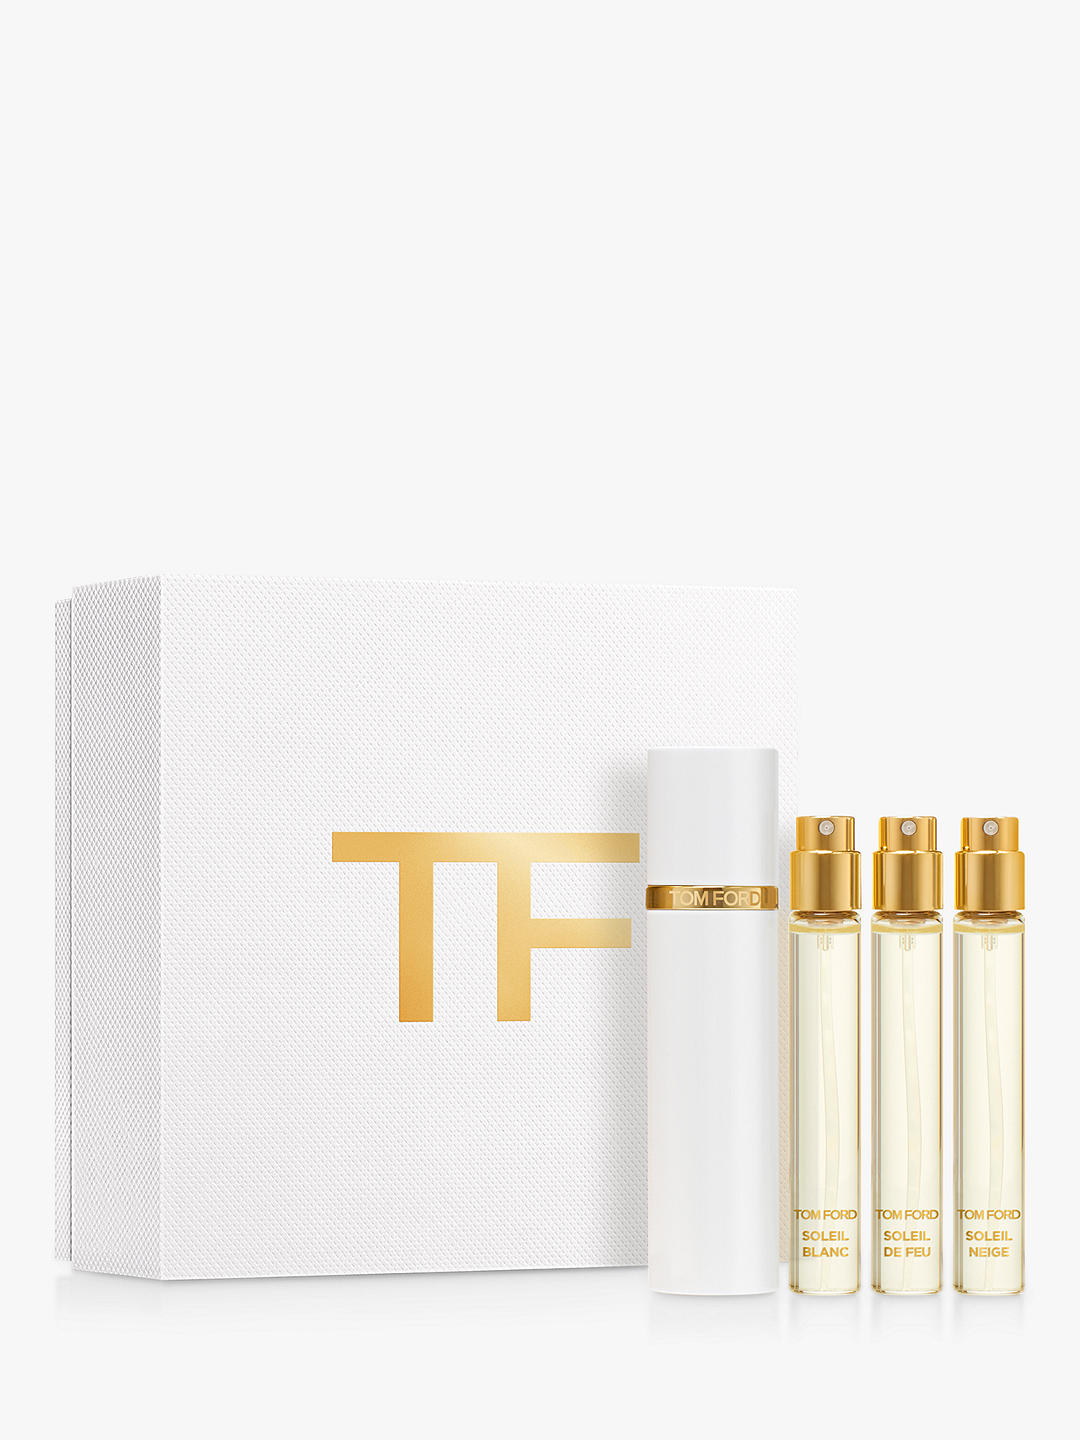 TOM FORD Soleil Trilogy Fragrance Gift Set, 3 x 10ml 1